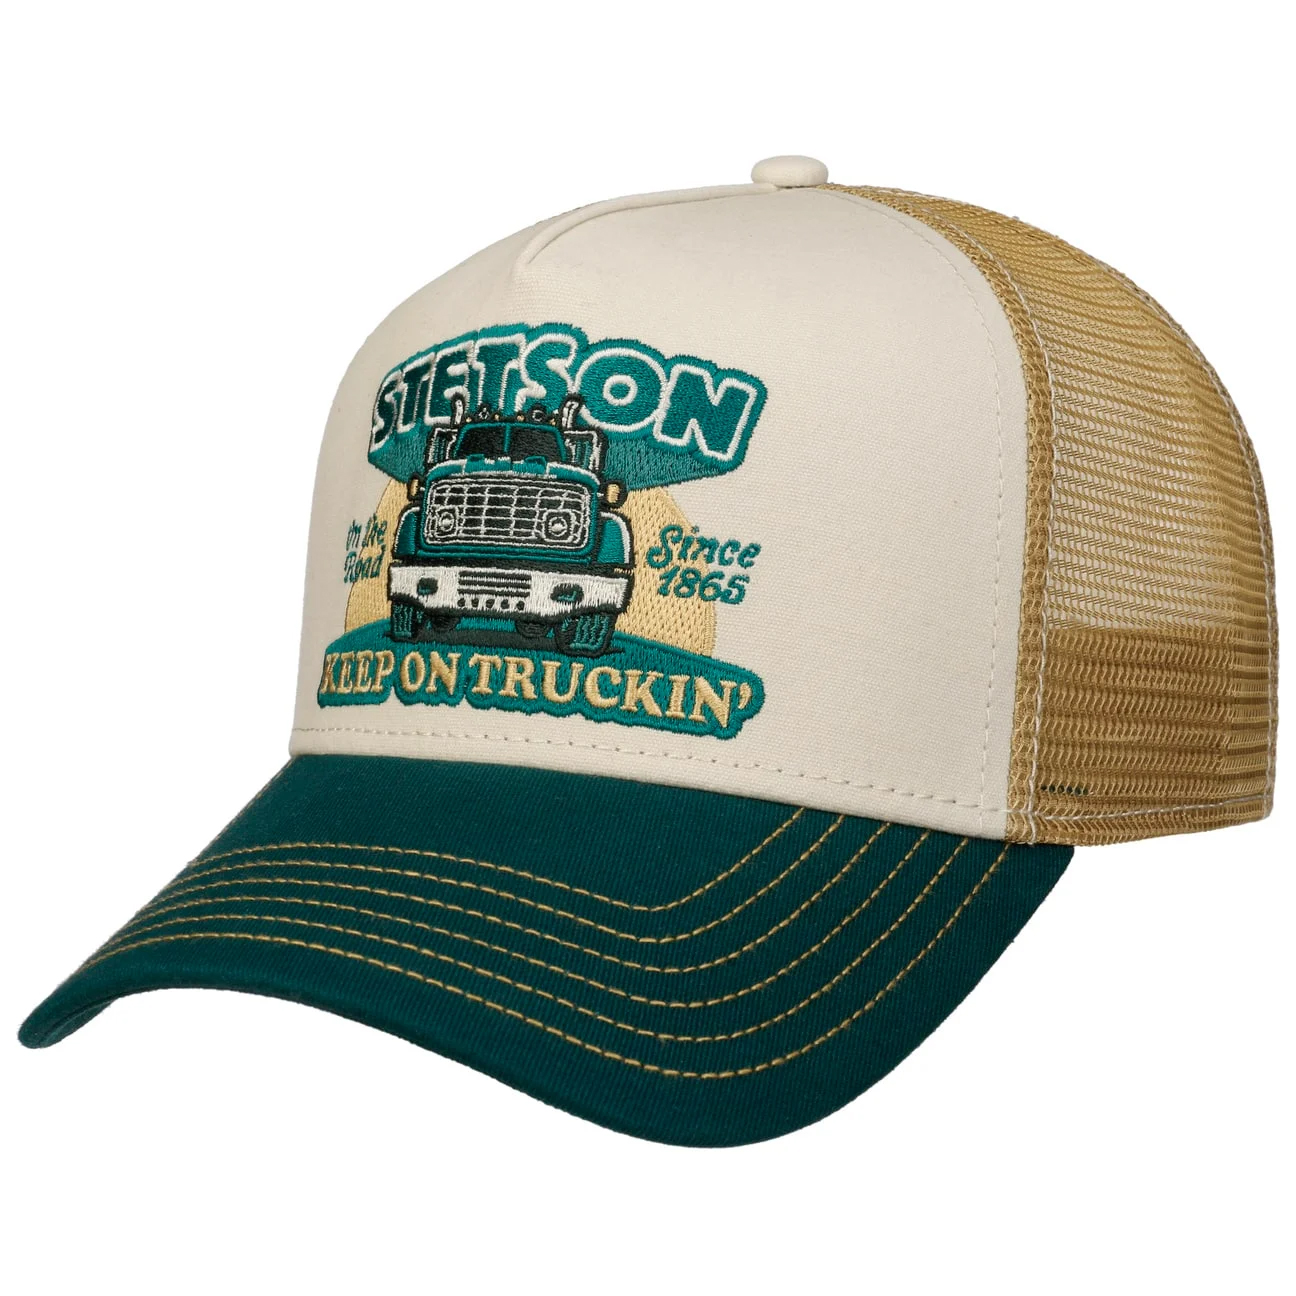 Stetson---Keep-On-Trucking-Trucker-Cap---Dark-Green